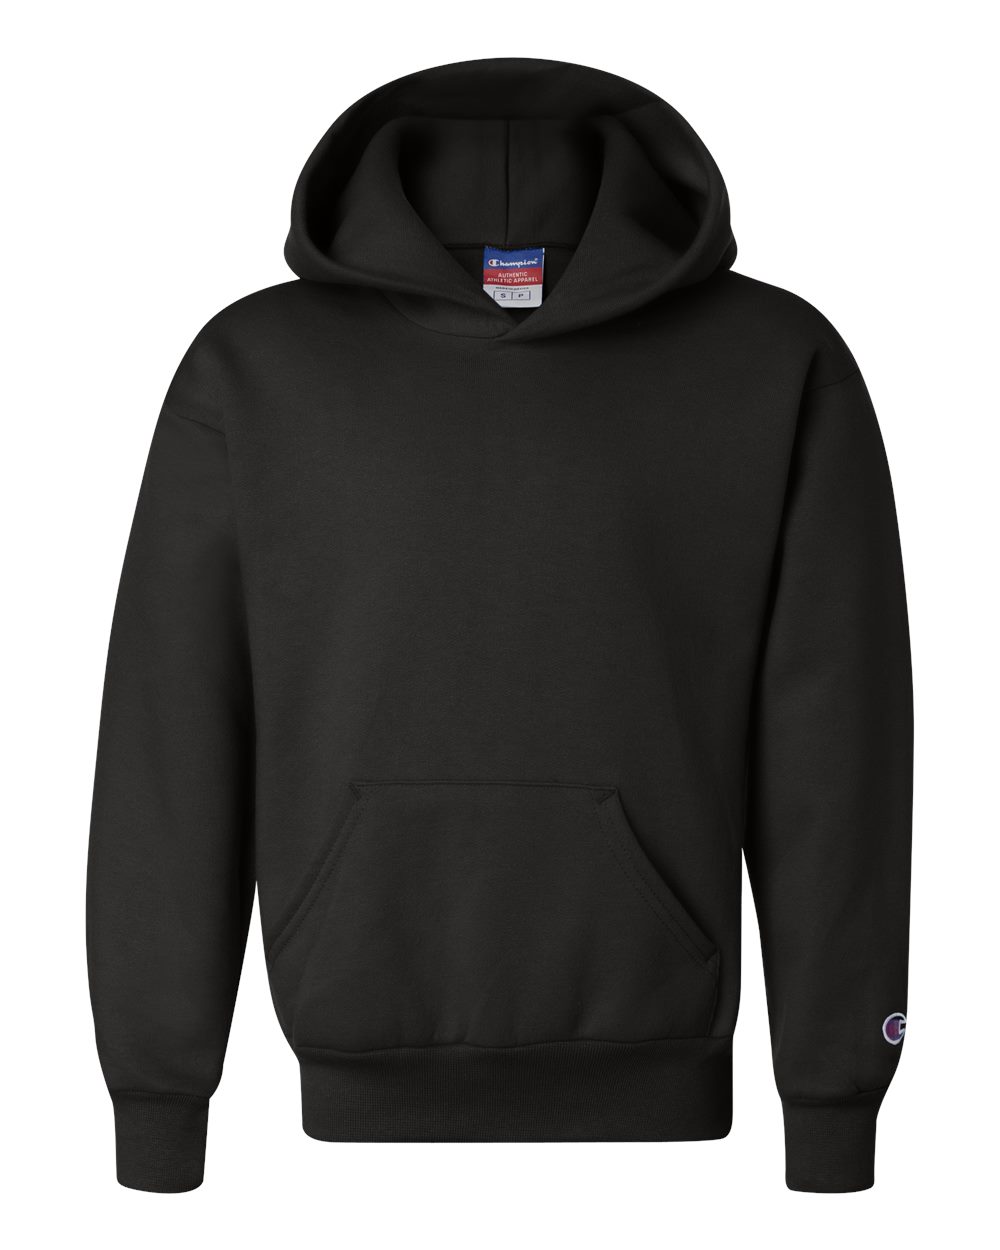 Double Dry Eco® Youth Hooded Sweatshirt - S790-Champion